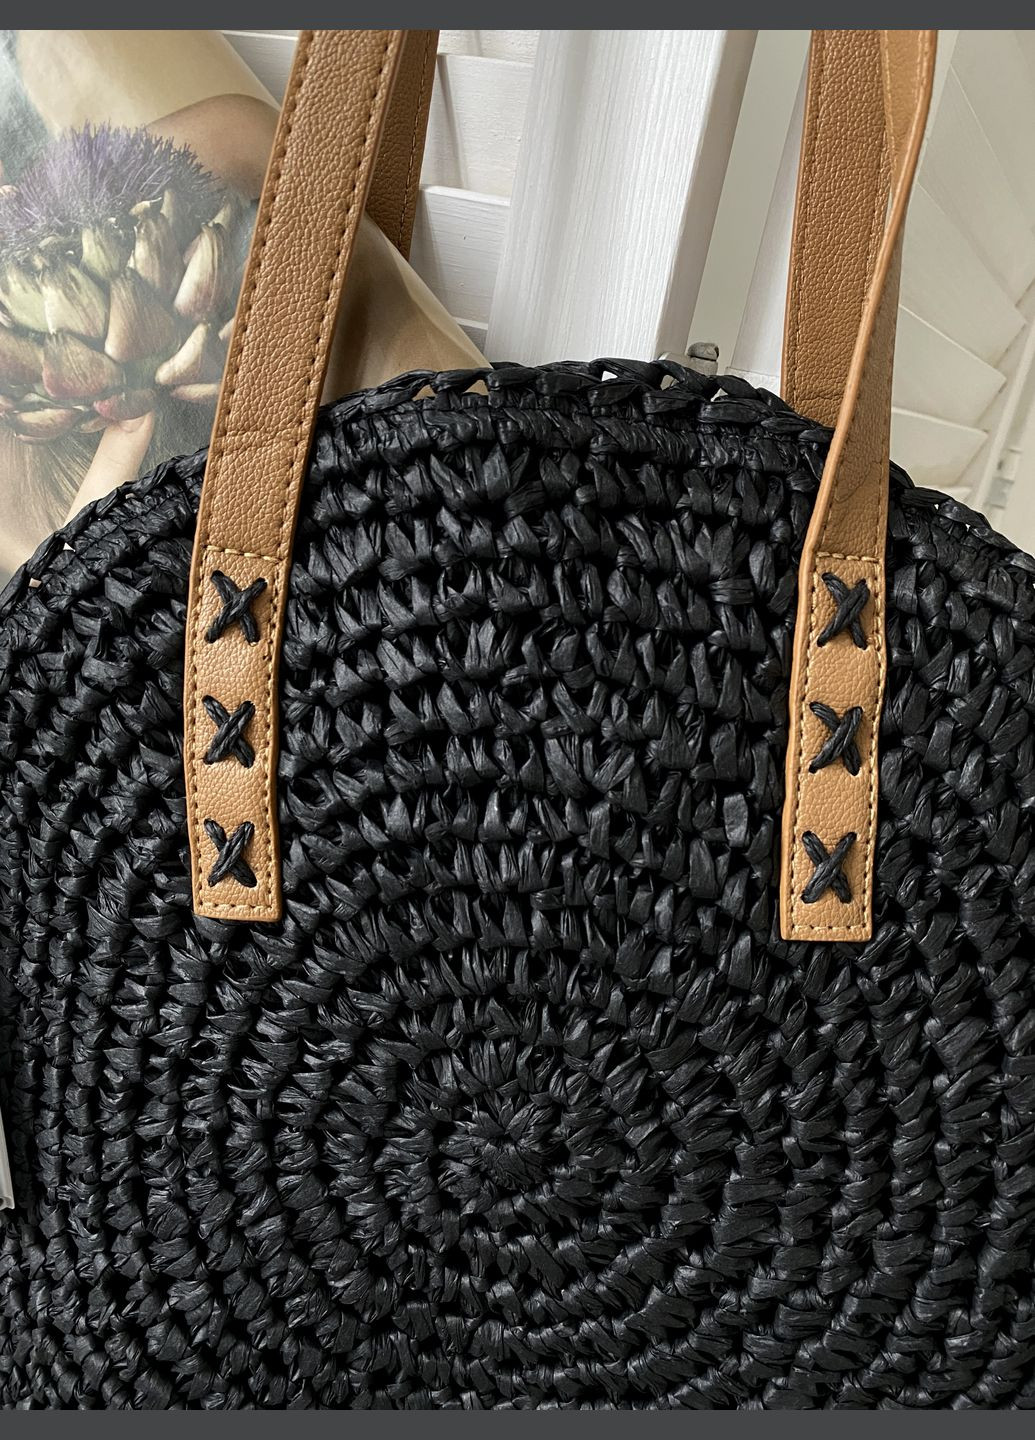 Женская летняя плетеная круглая сумка Шоппер No Brand (293510691)